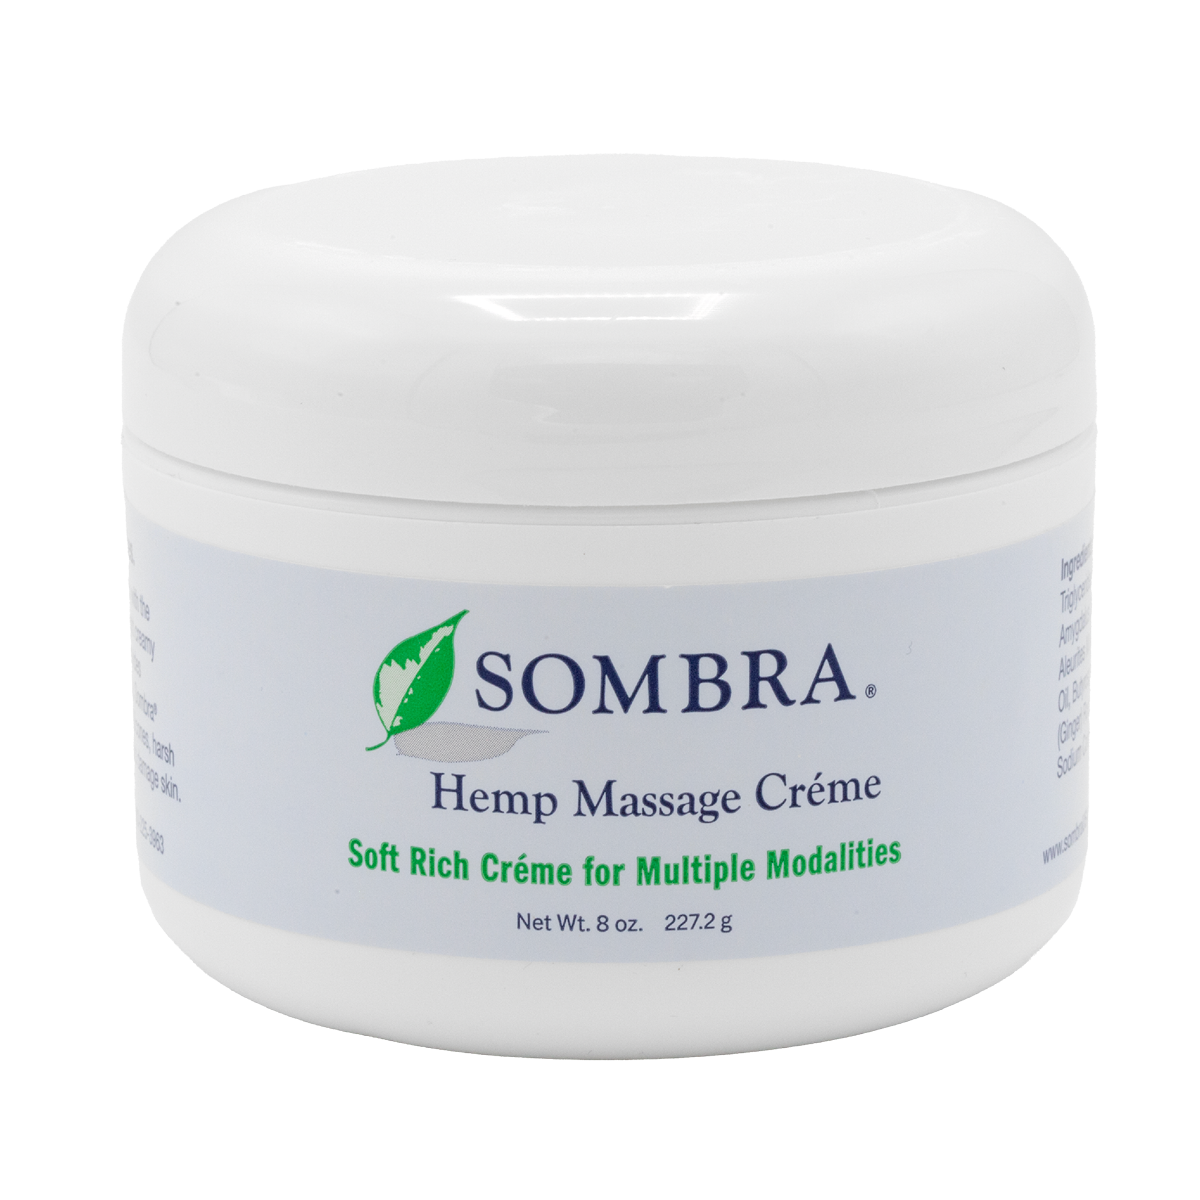 Sombra Hemp Massage Creme 8 oz